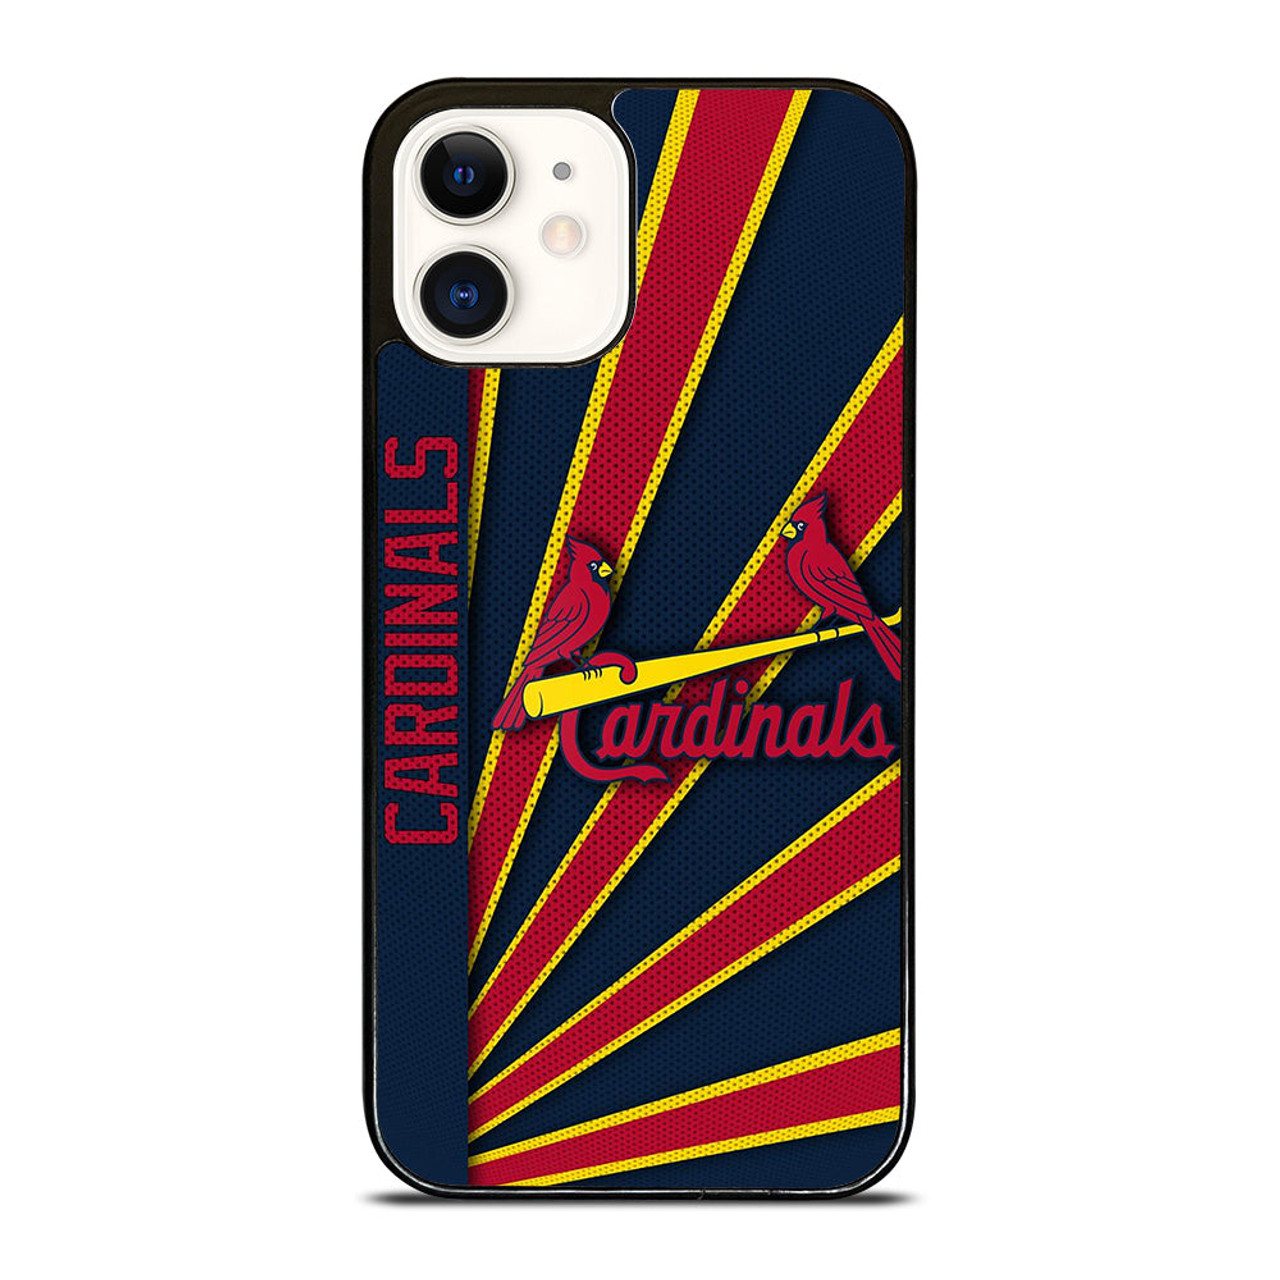 Official St. Louis Cardinals Phone Cases, Cardinals iPhone